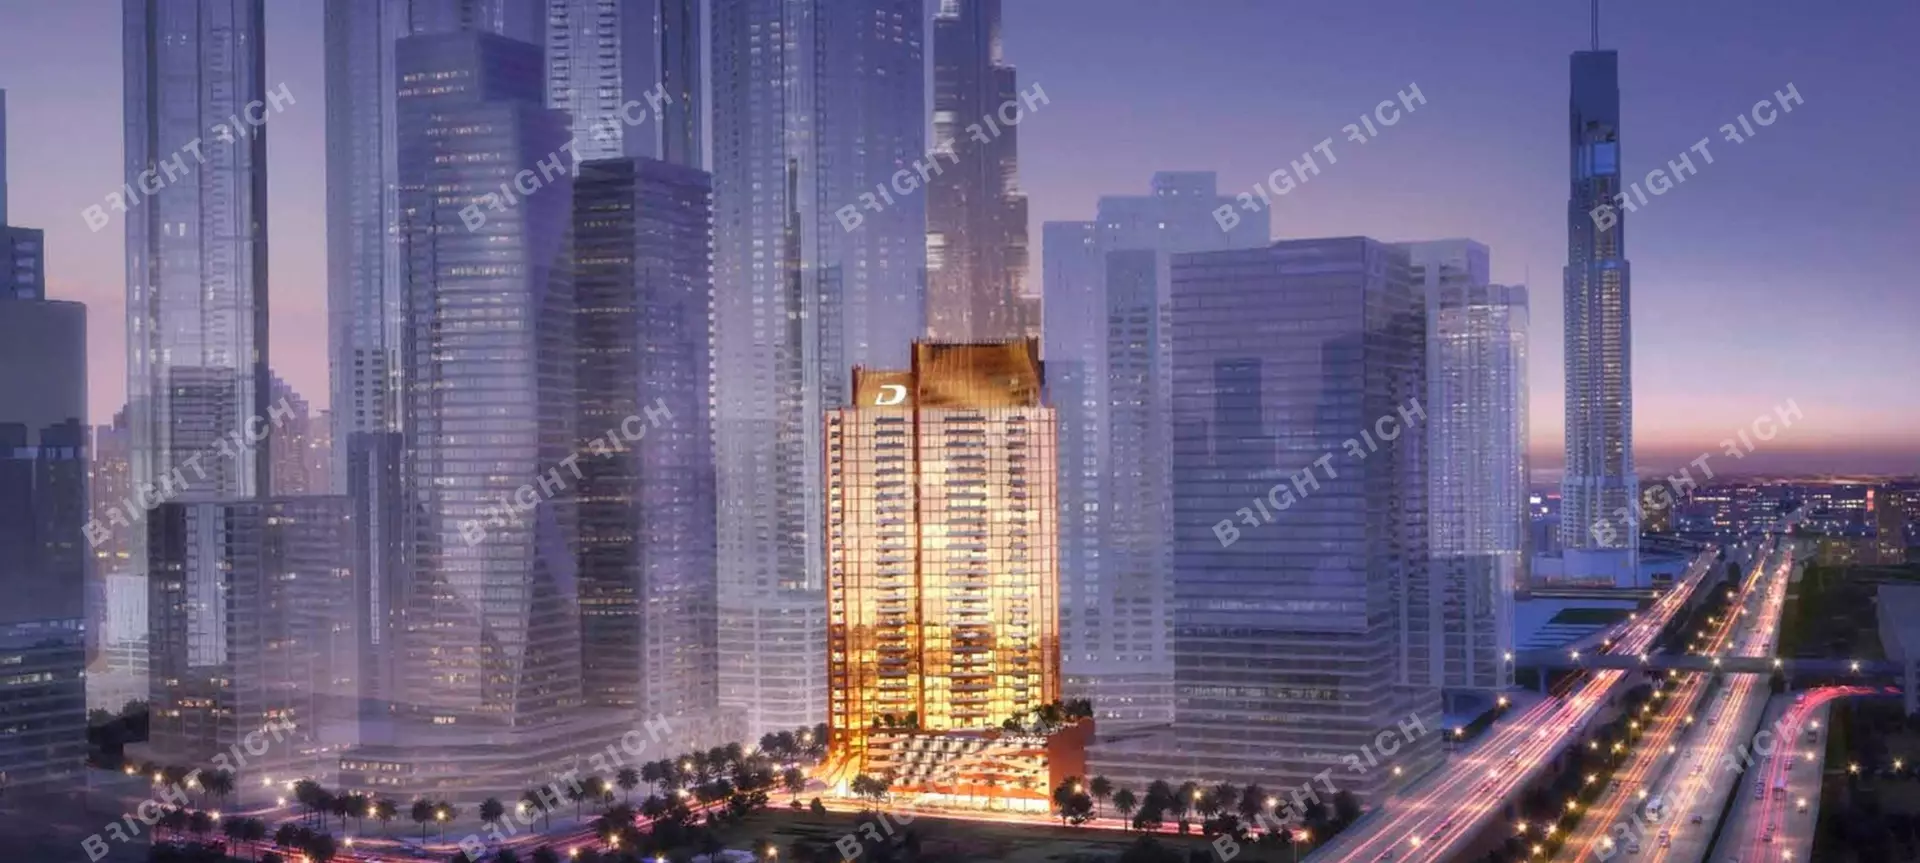 Elegance Tower, апарт-комплекс в Дубае